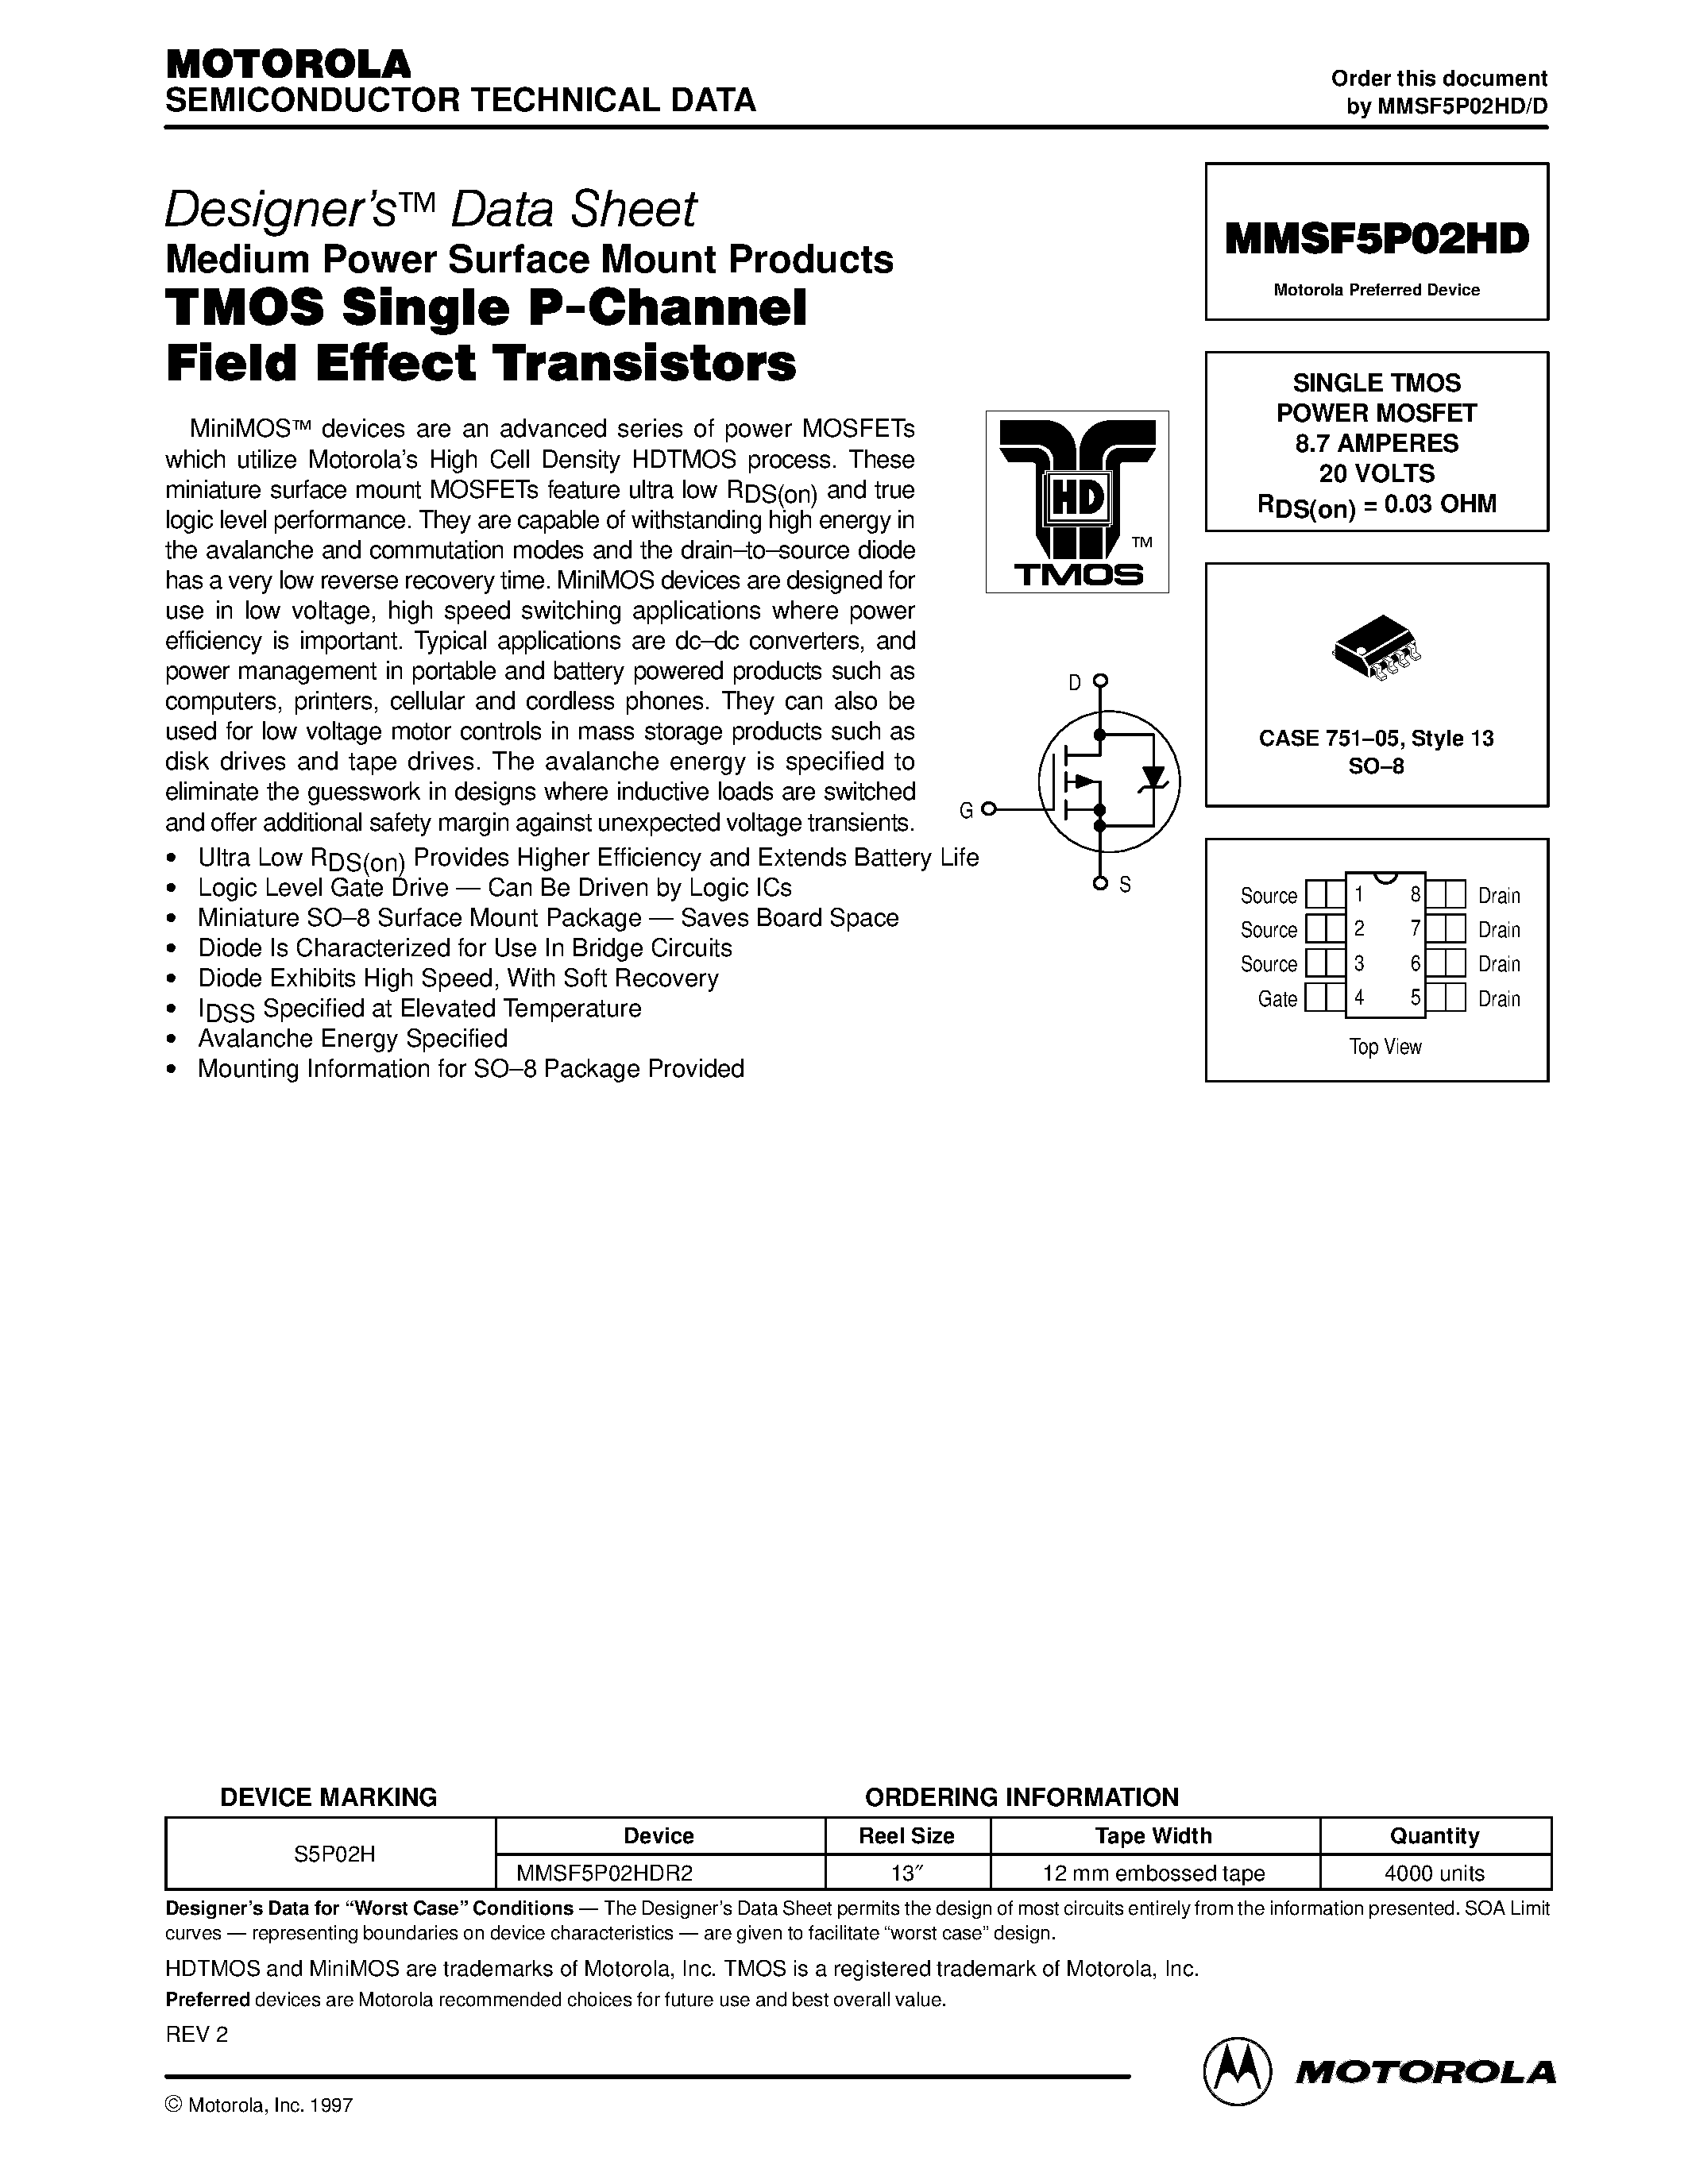 Datasheet MMSF5P02HD - SINGLE TMOS POWER MOSFET 8.7 AMPERES 20 VOLTS page 1